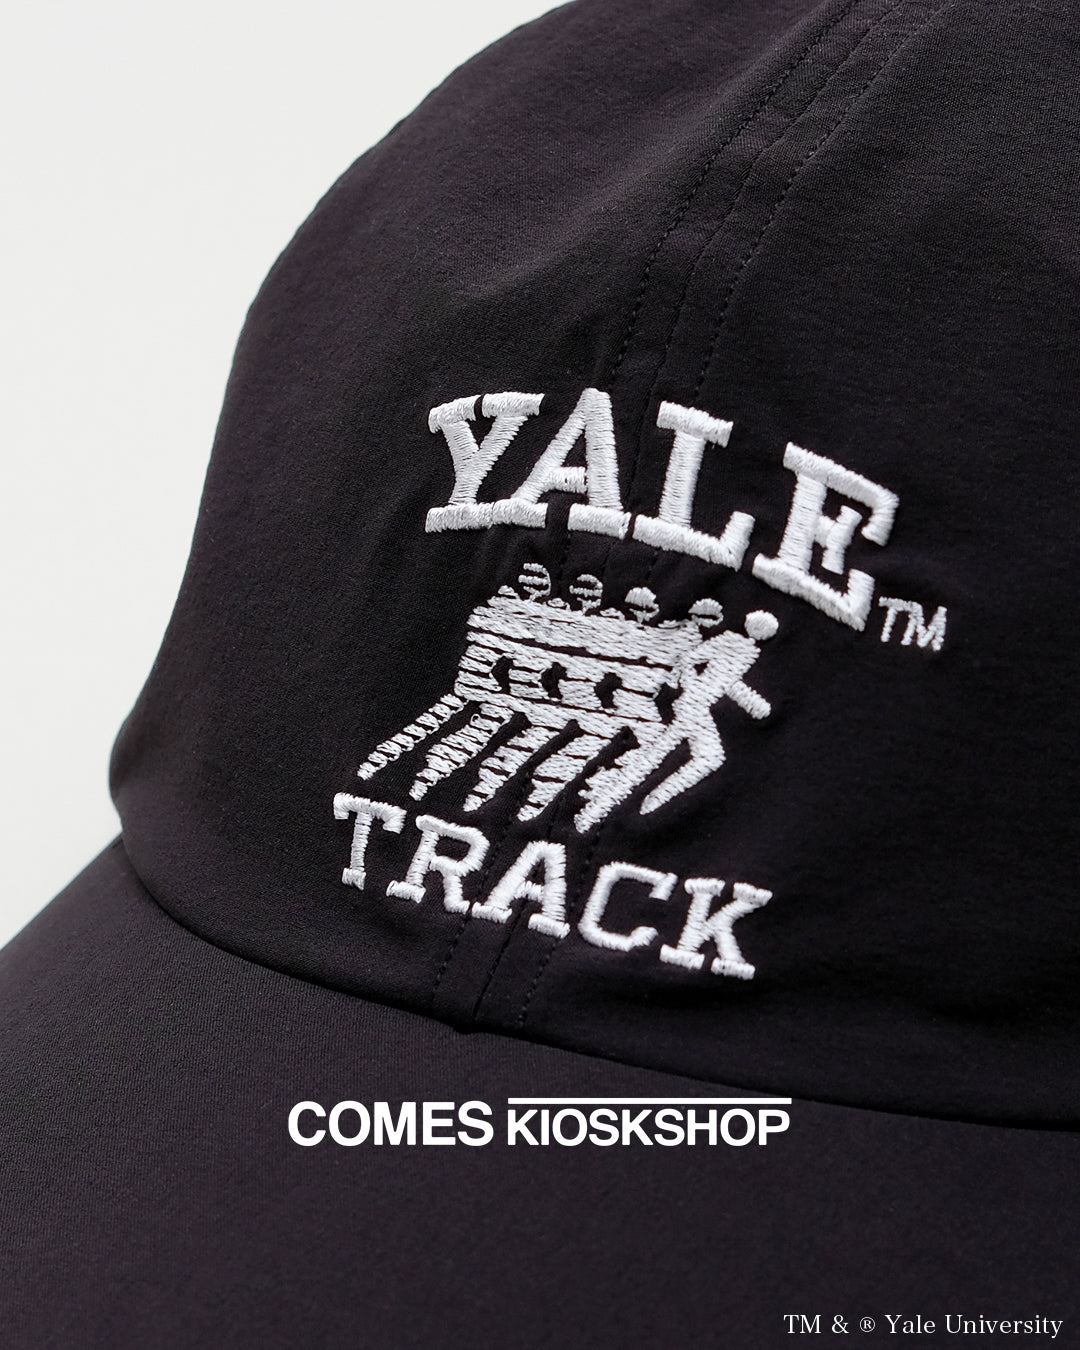 YALE TRACK MESH CAP